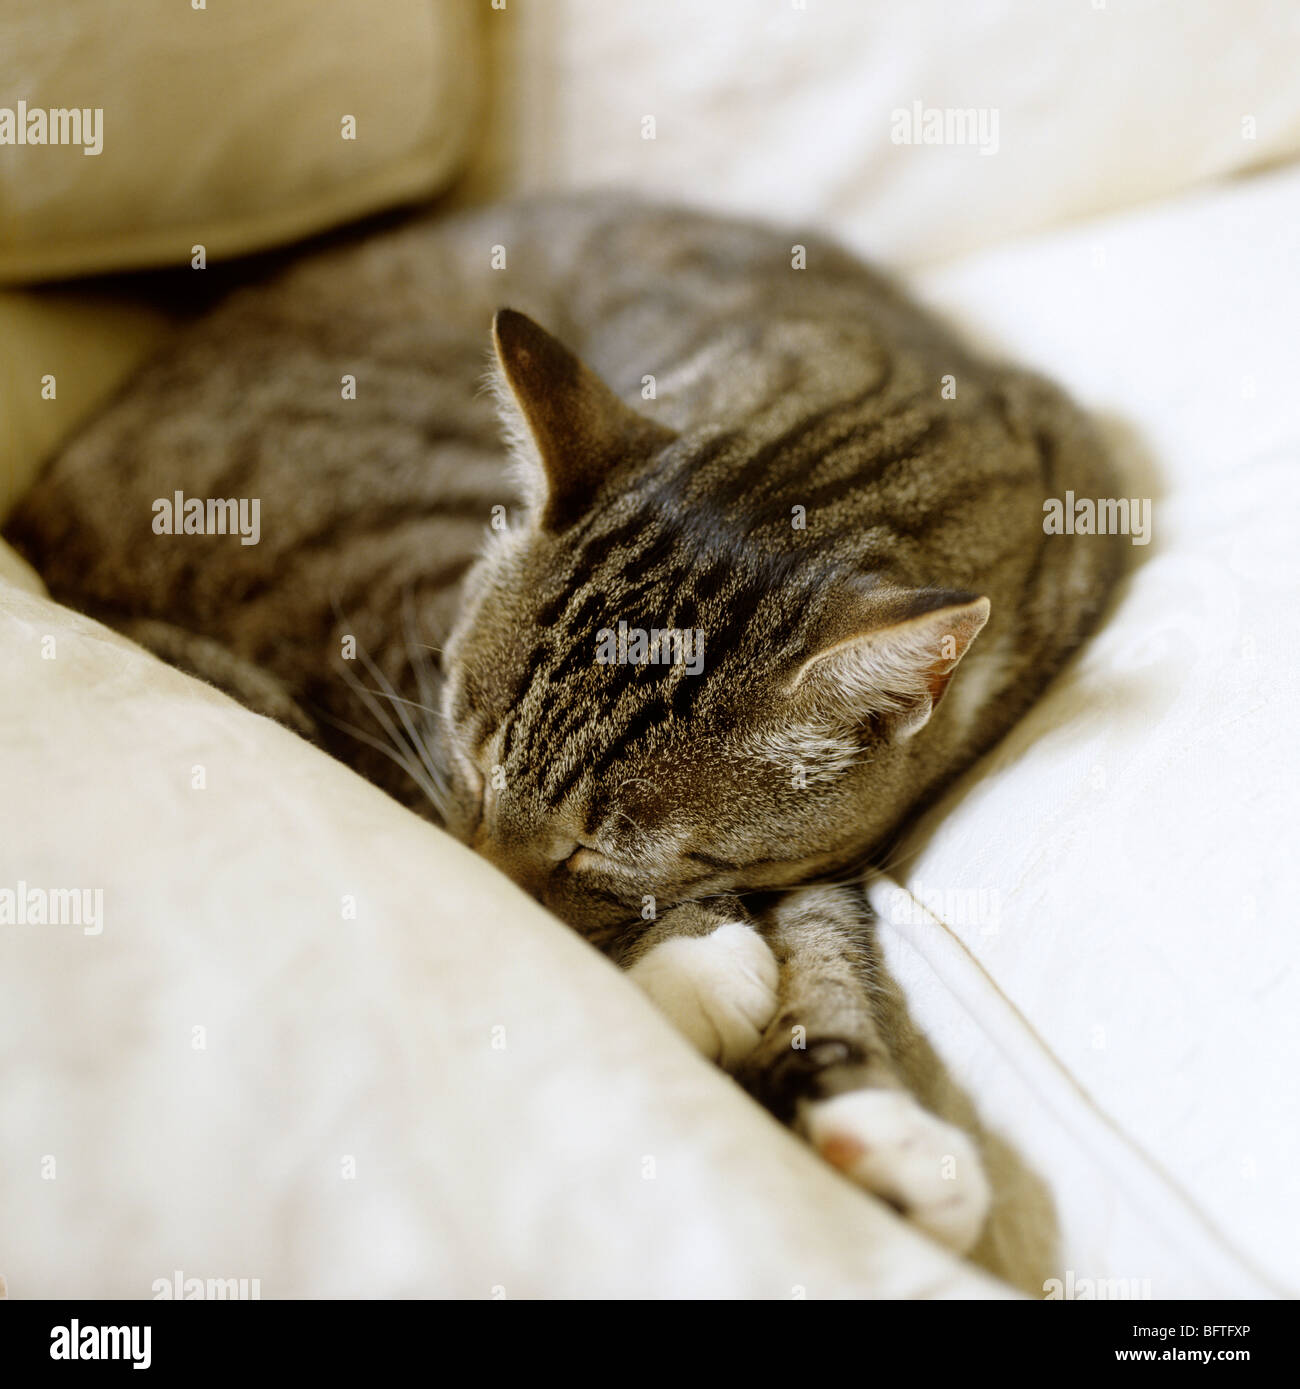 A tabby cat sleeping on cream cushions Stock Photo